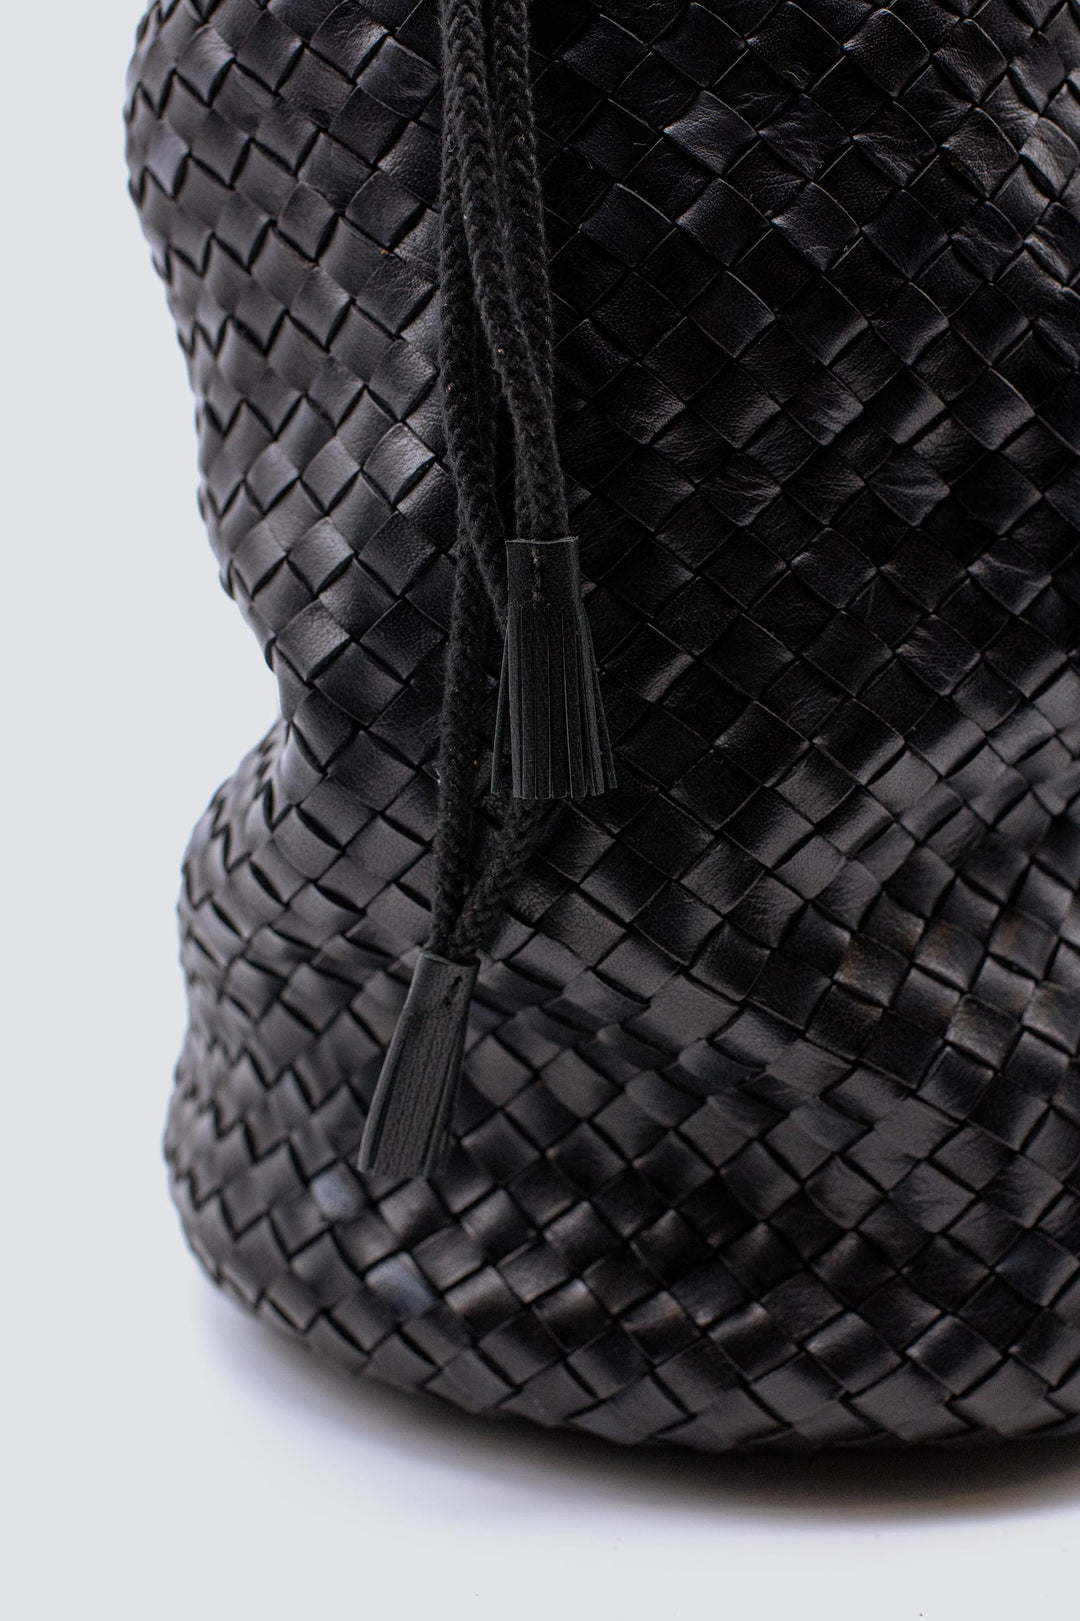 Dragon Diffusion woven leather bag handmade - Jackie Bucket Lining Black